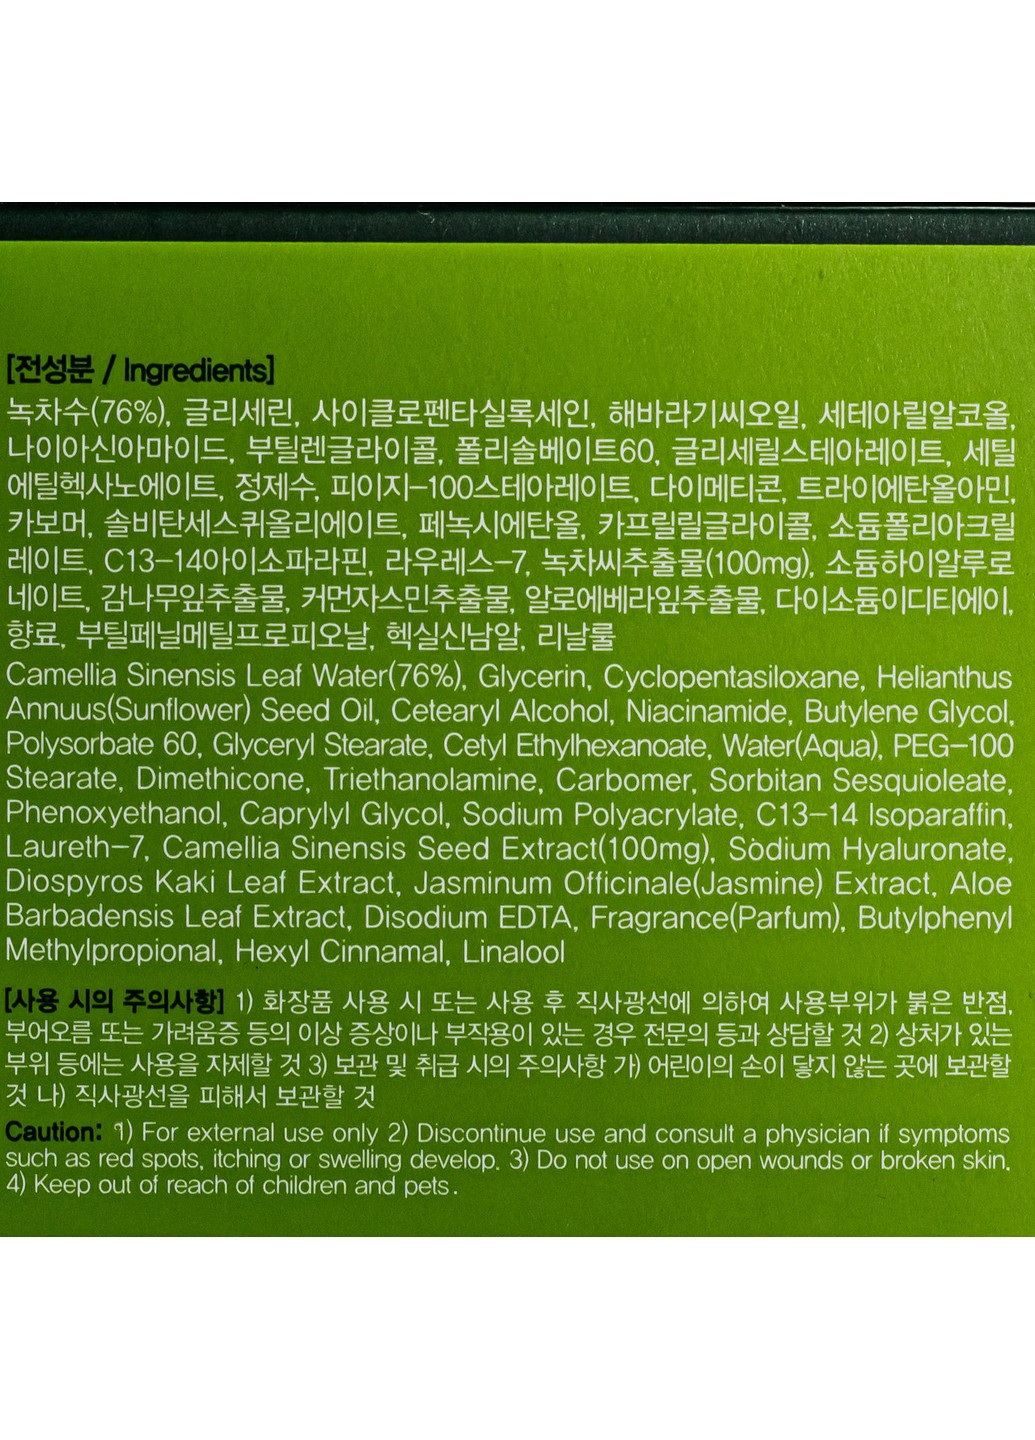 Крем осветляющий для лица Green Tea Whitening Water Cream FarmStay (254843986)